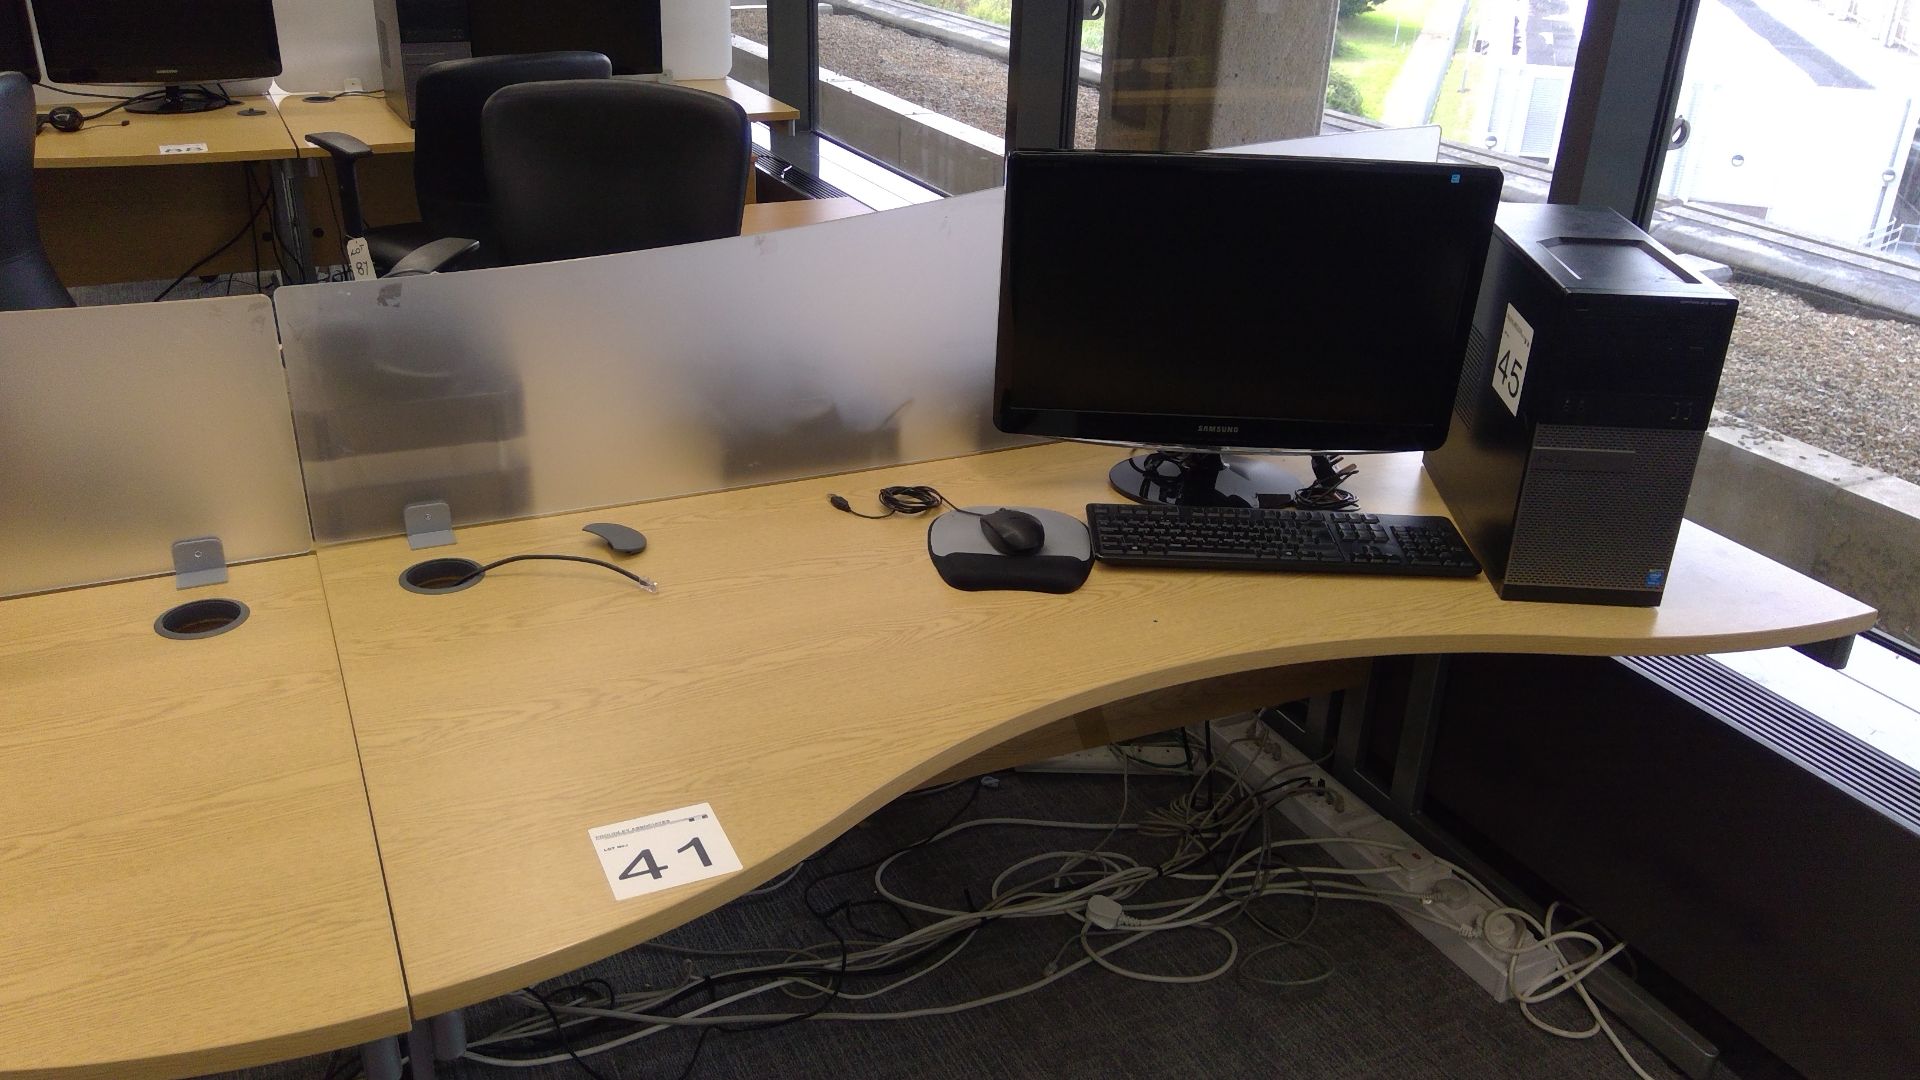 Oak effect ergonomic desk complete with opaque desk divider